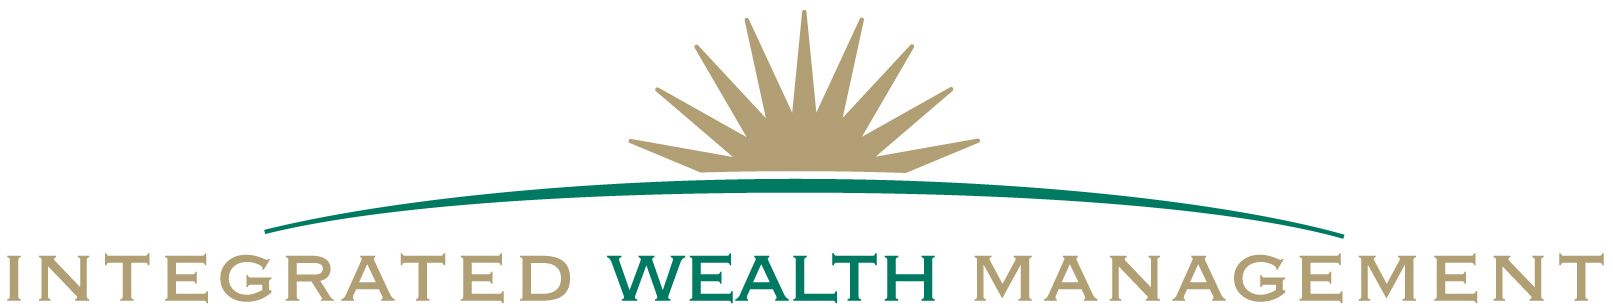 Integrated Wealth Management logo